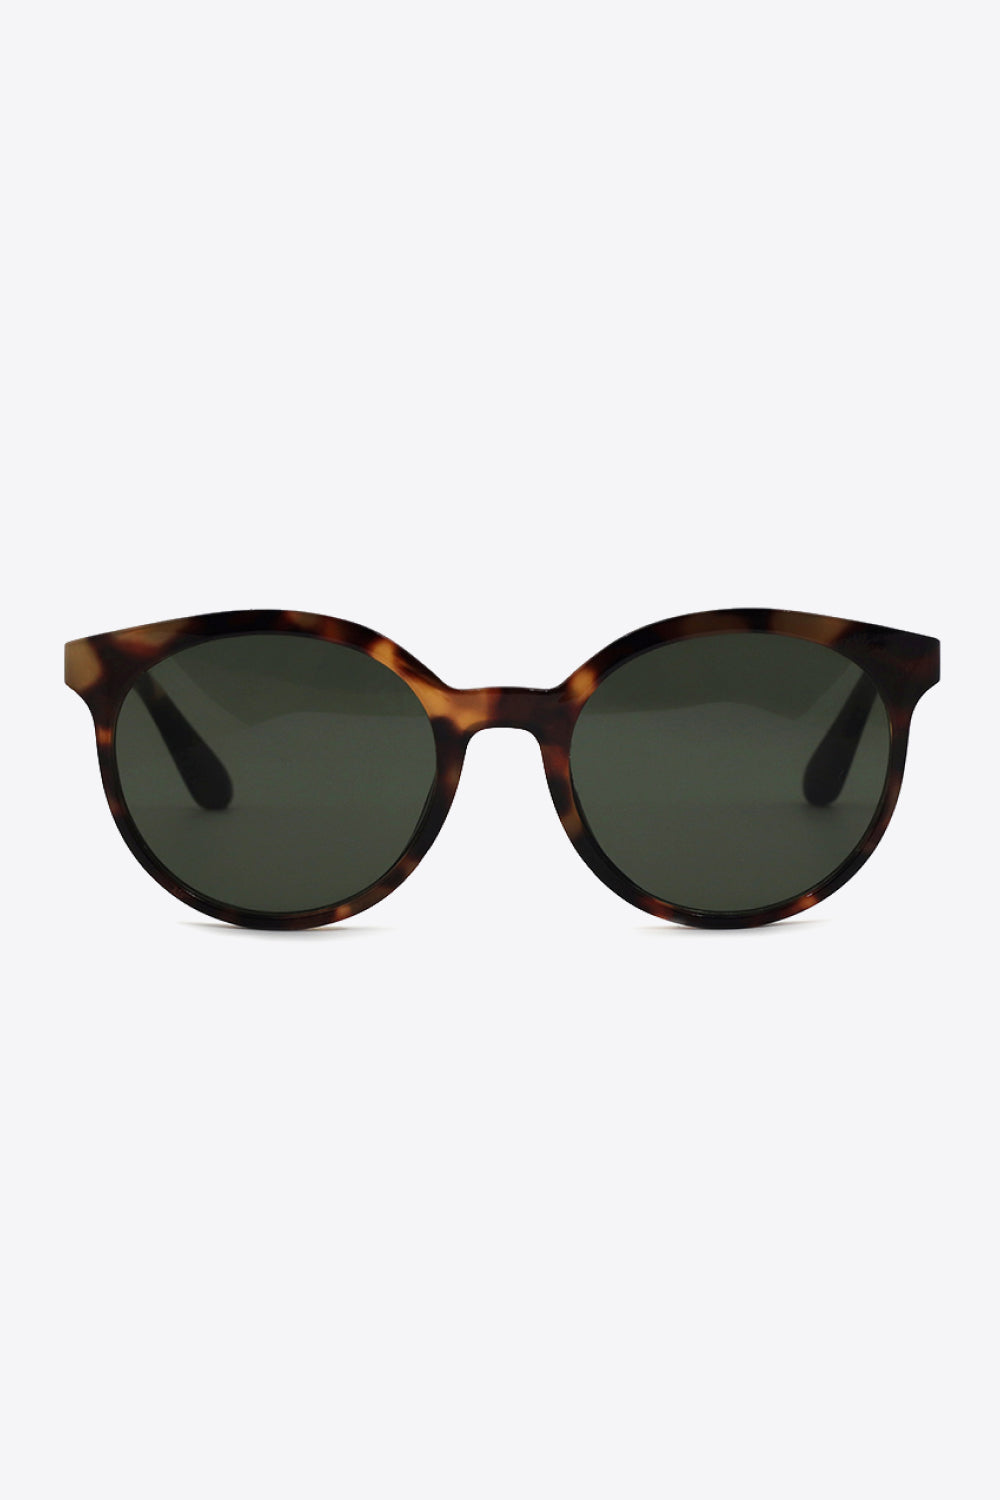 Women’s Tortoiseshell Round Polycarbonate Sunglasses